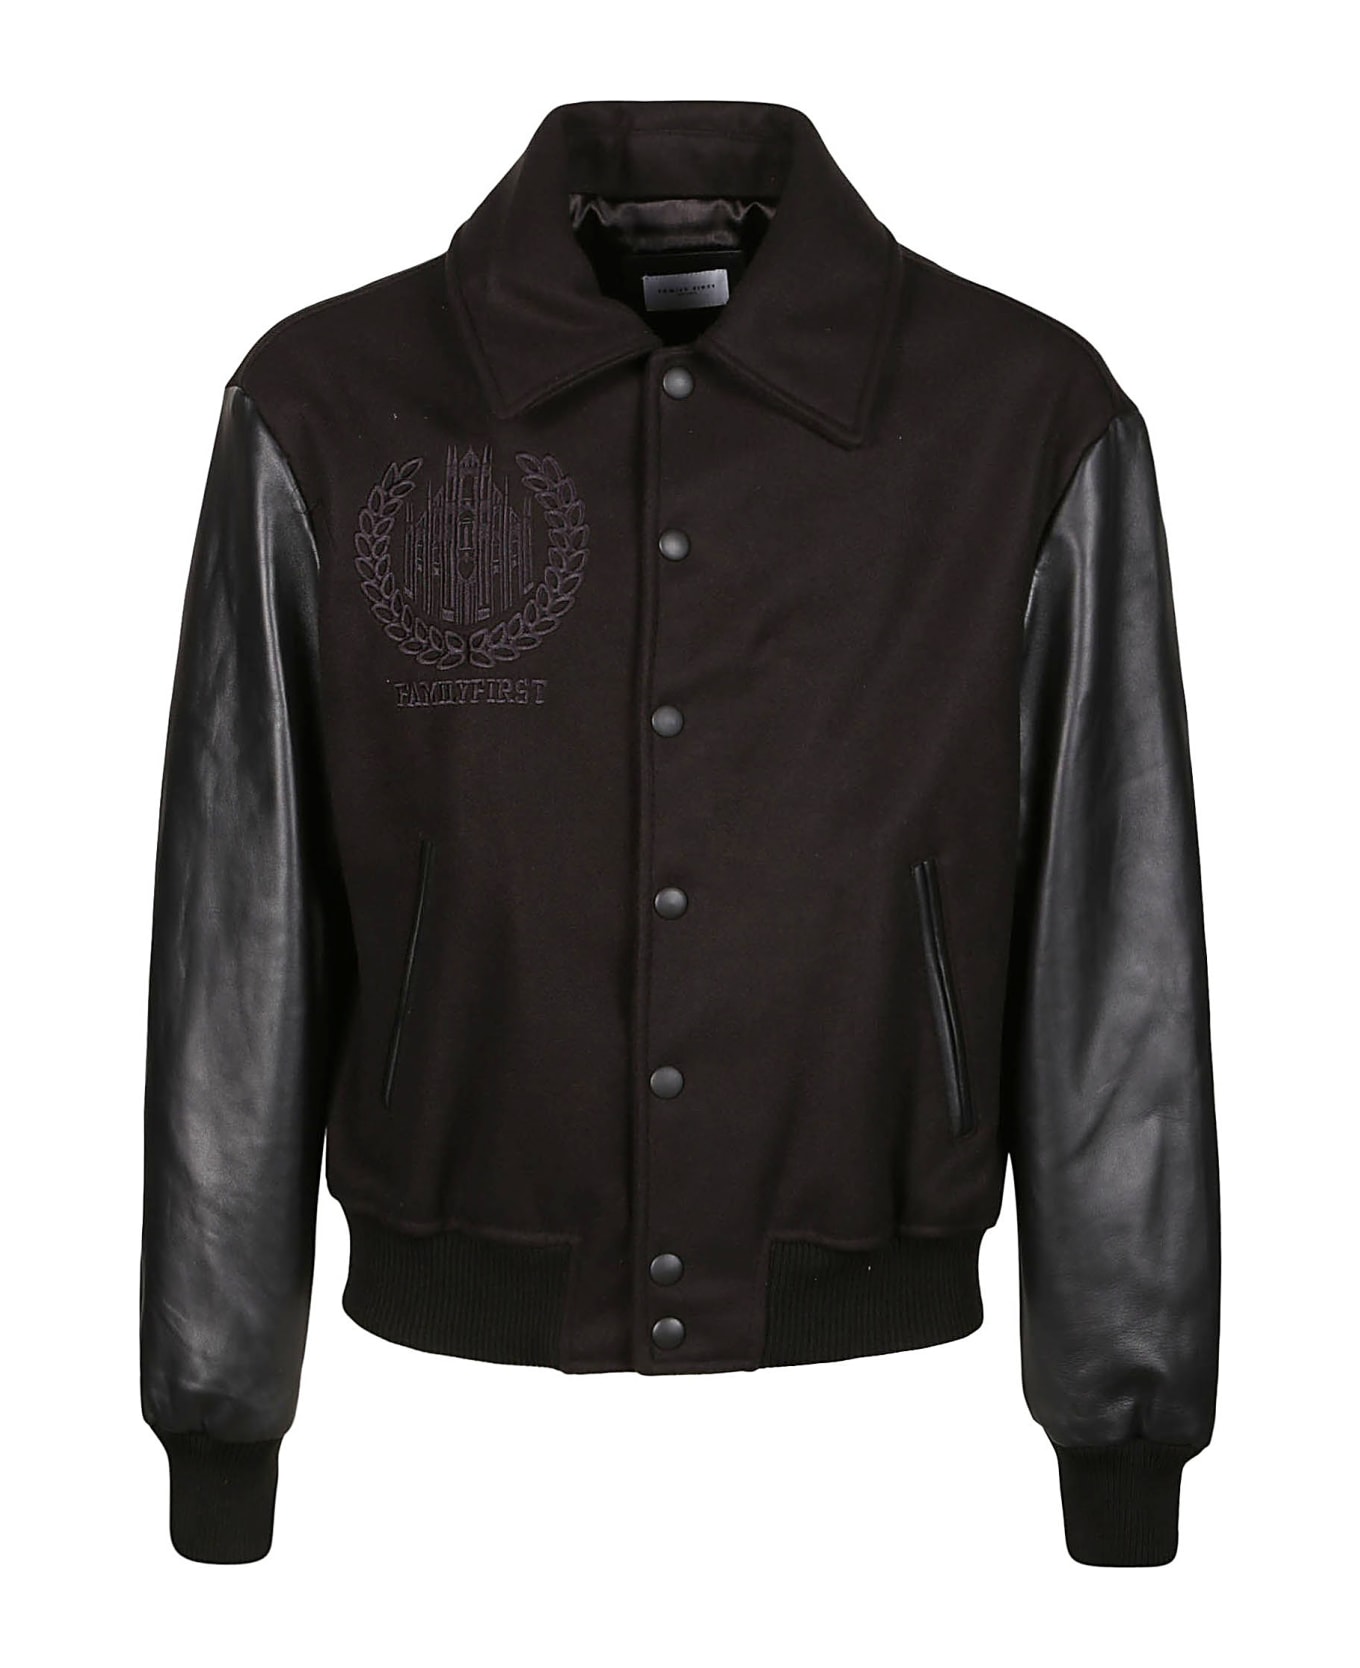 Family First Milano Varsity College Jacket - Black